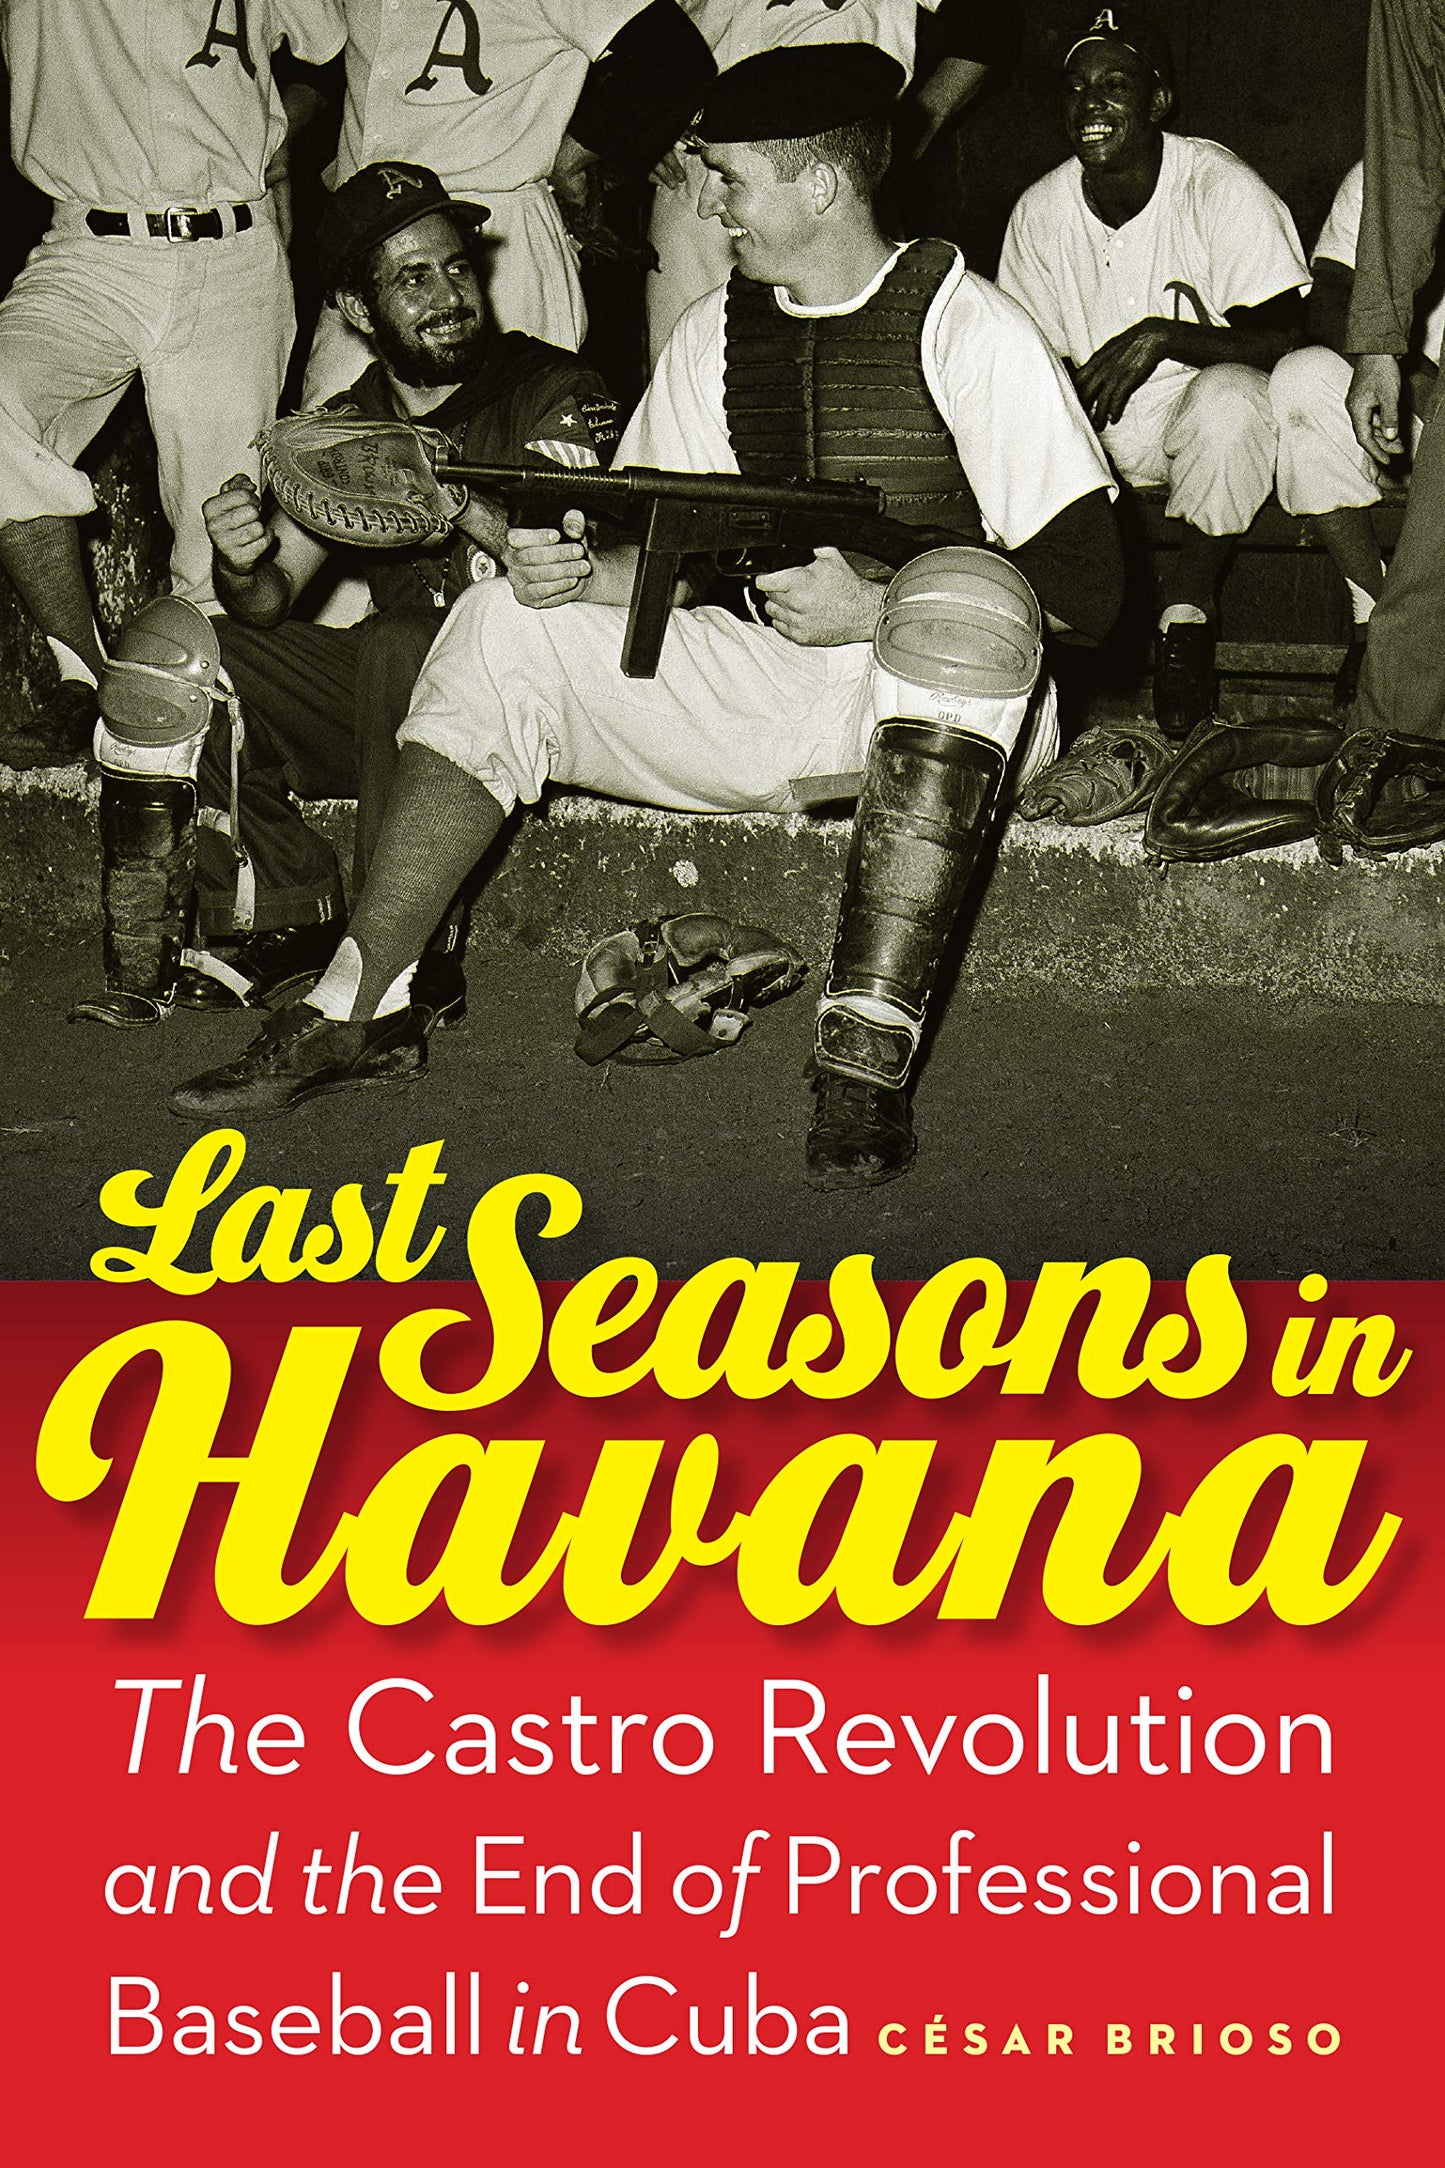 Last Seasons in Havana, by César Brioso